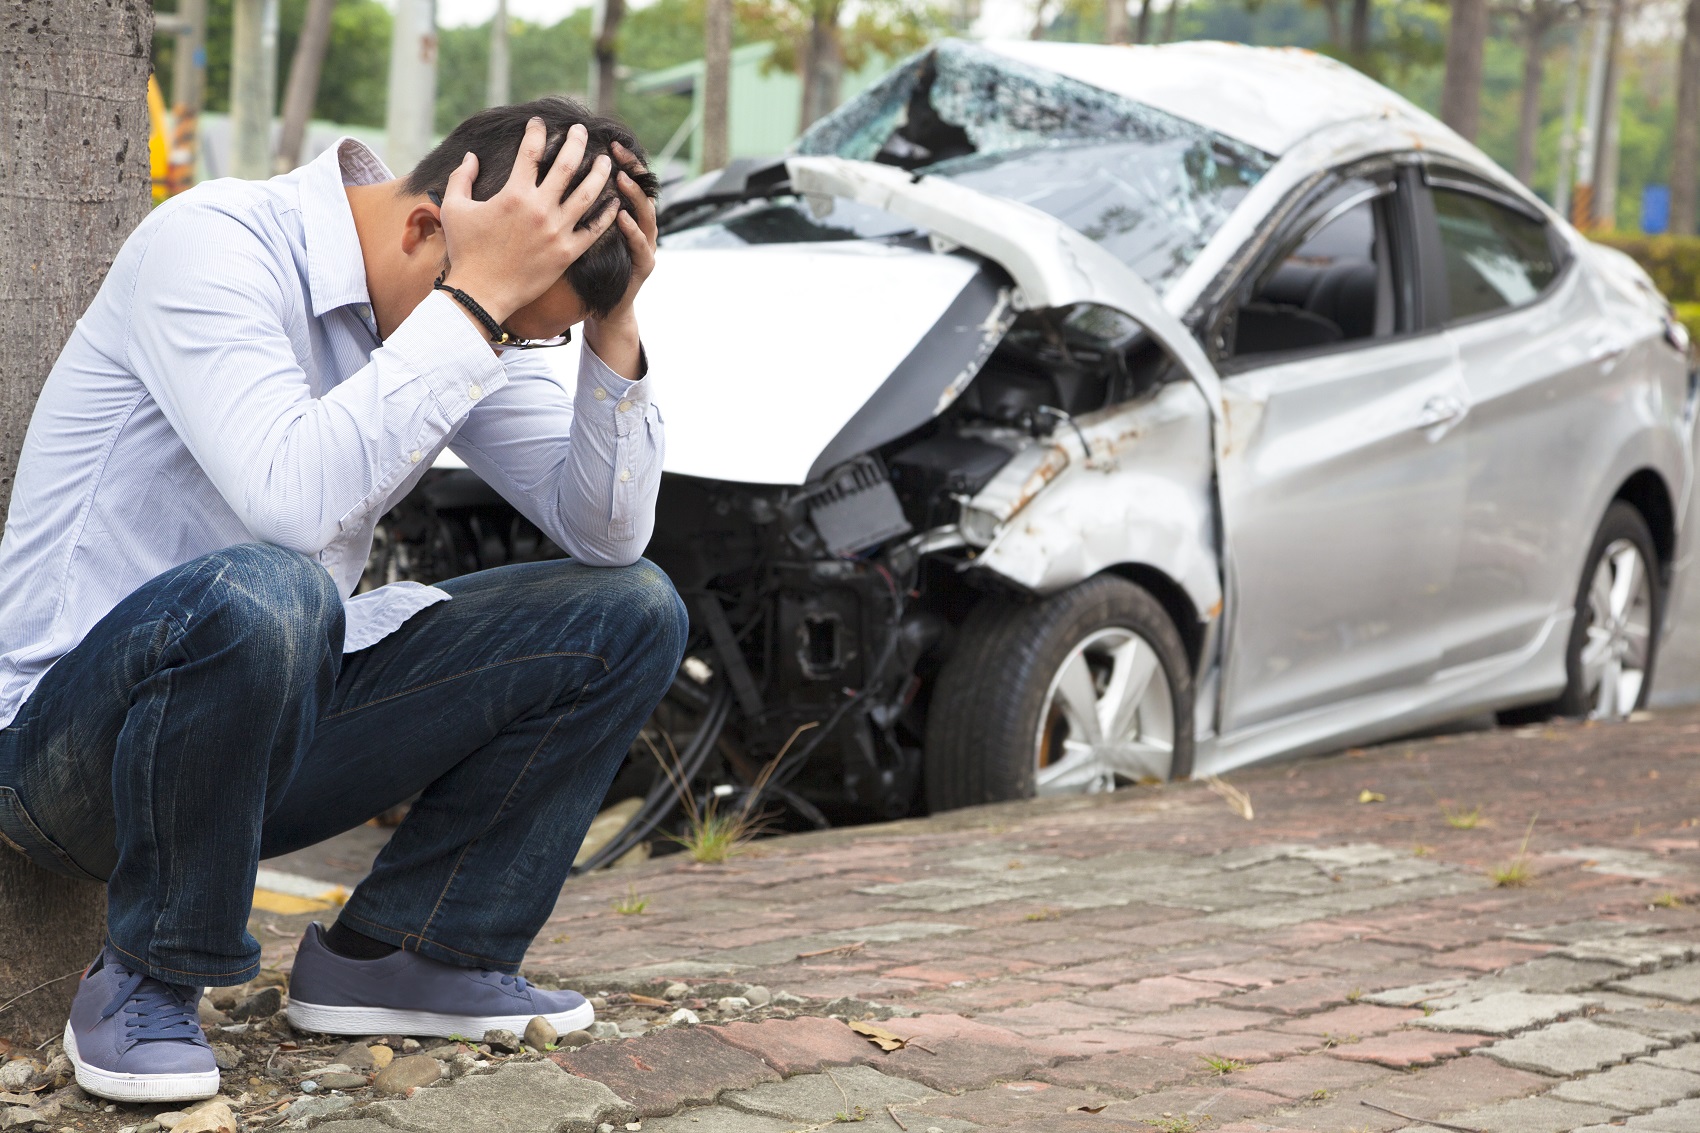 Investigadores detectan zonas de atención prioritarias para prevenir accidentes de tránsito